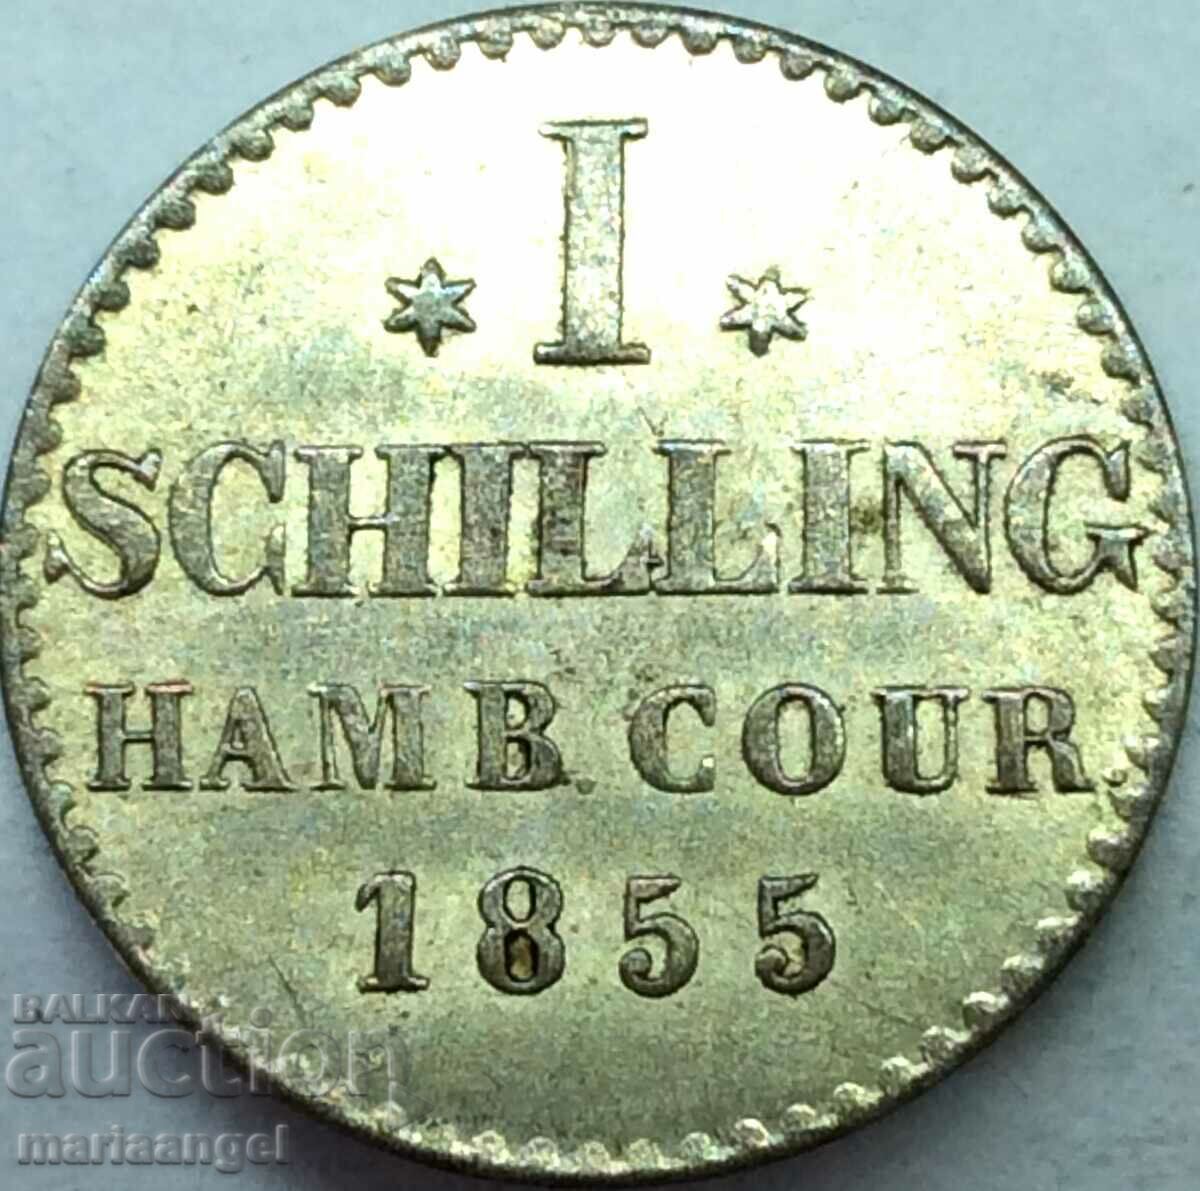 Хамбург 1 Шилинг 1855 Германия сребро